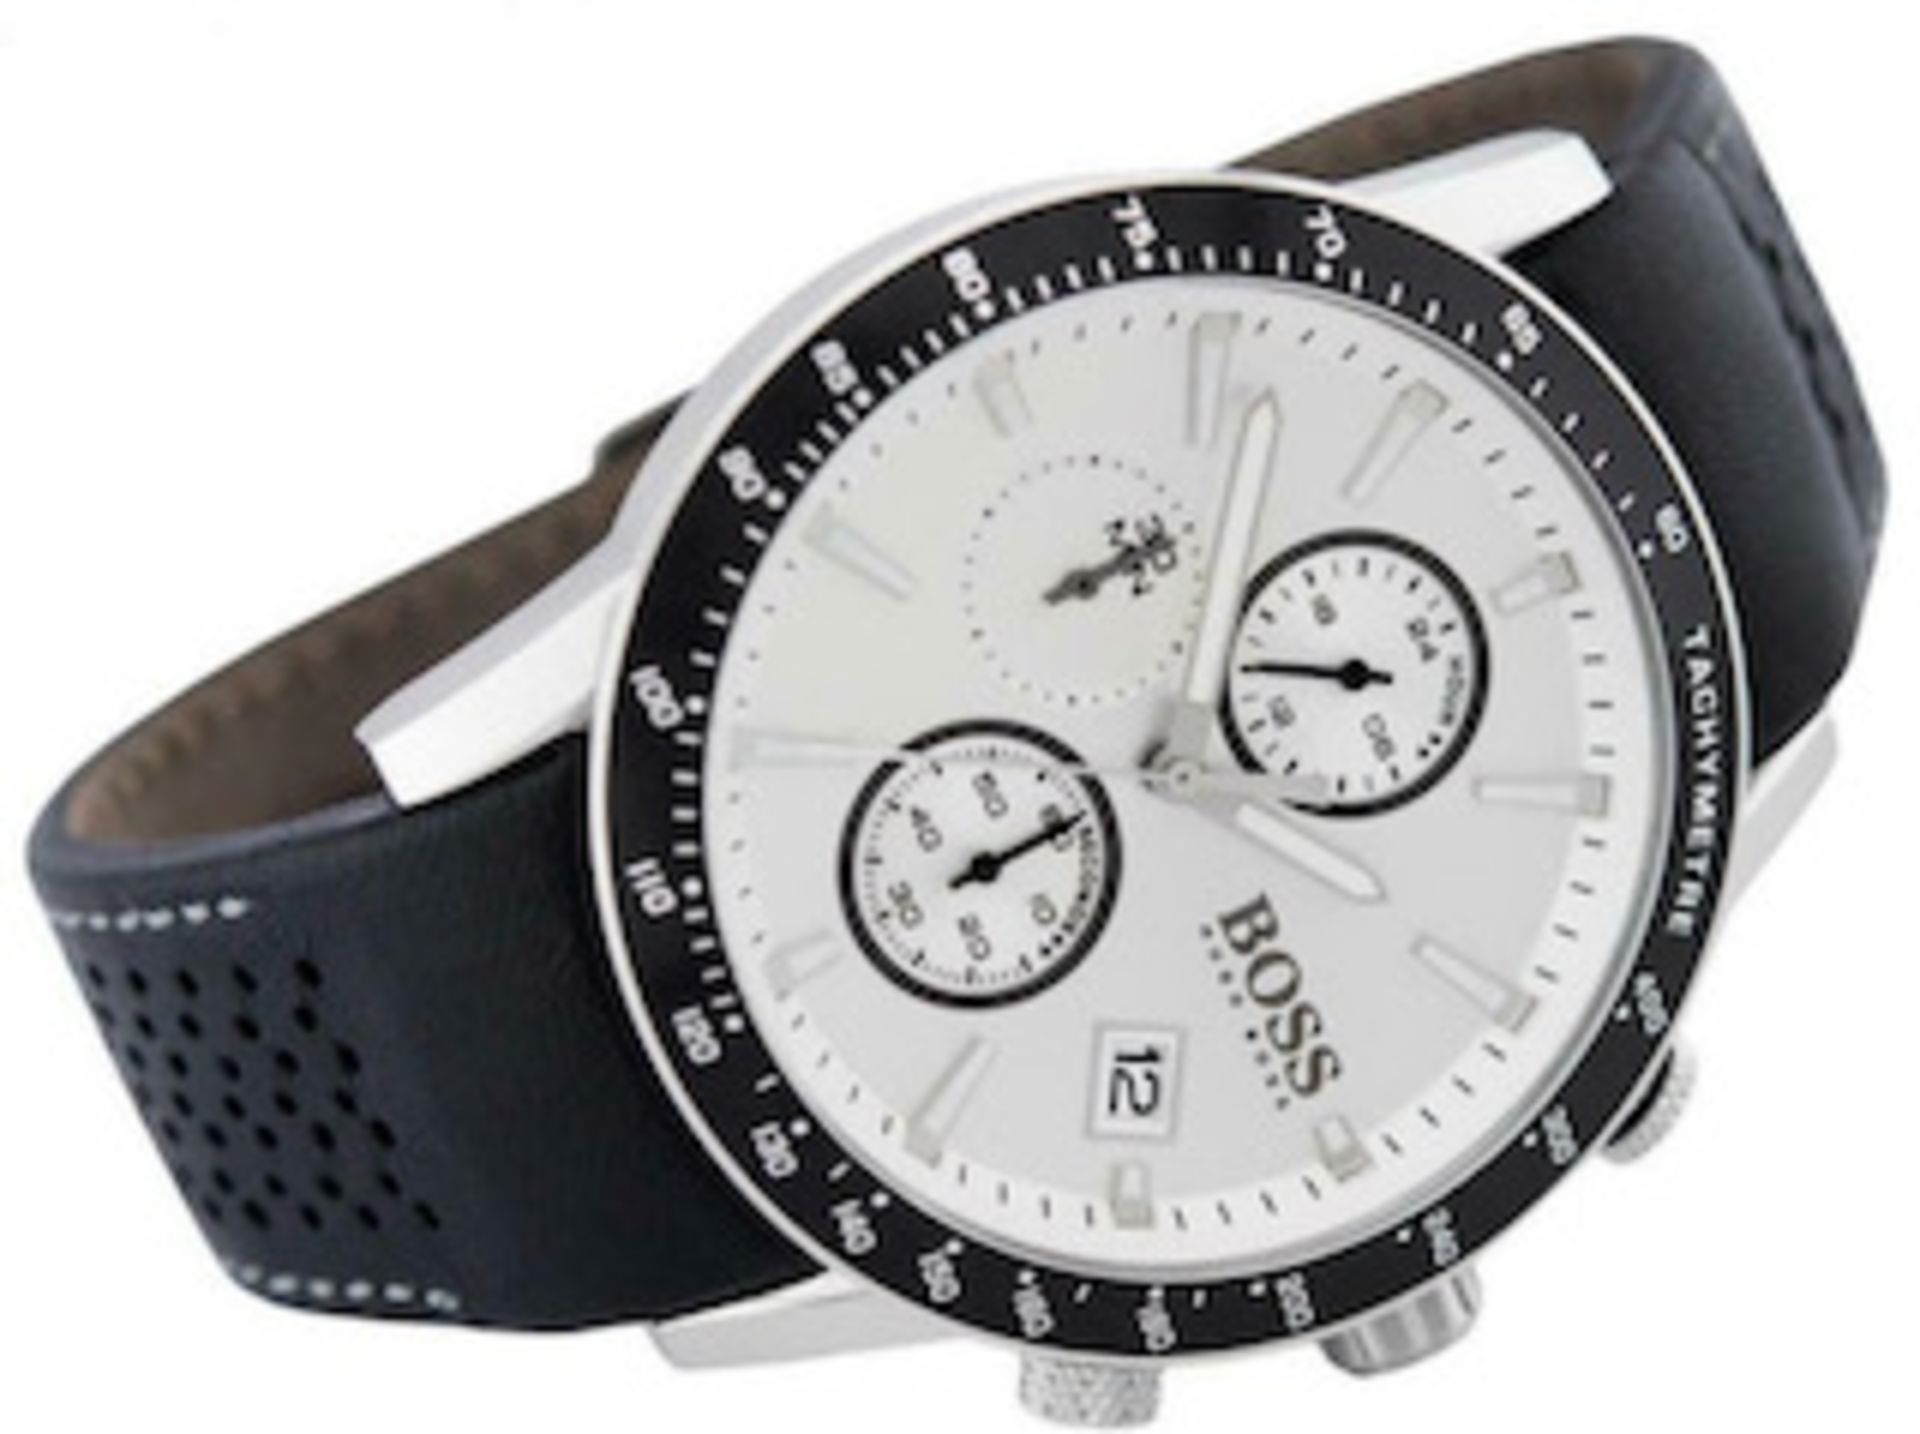 Hugo Boss 1513403 Men's Rafale Black Leather Strap Chronograph Watch - Image 4 of 5